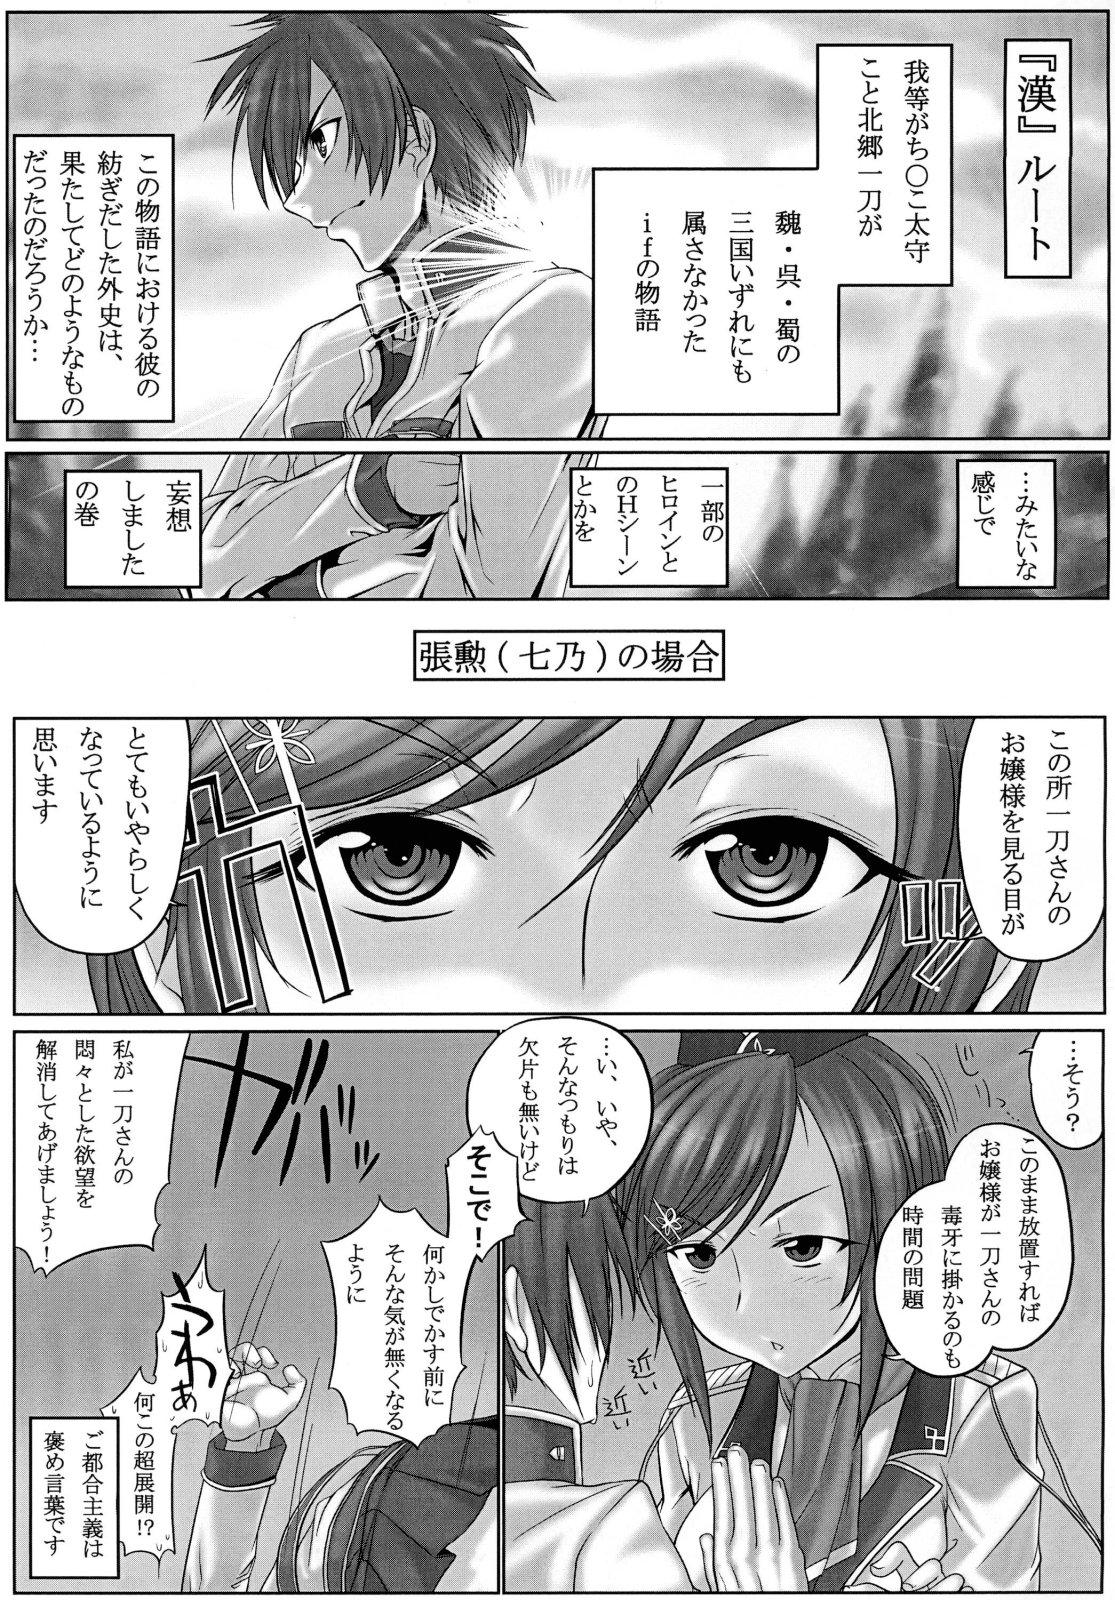 Travesti Shin Koihime † Masaka no Choice - Koihime musou Real Amateurs - Page 5